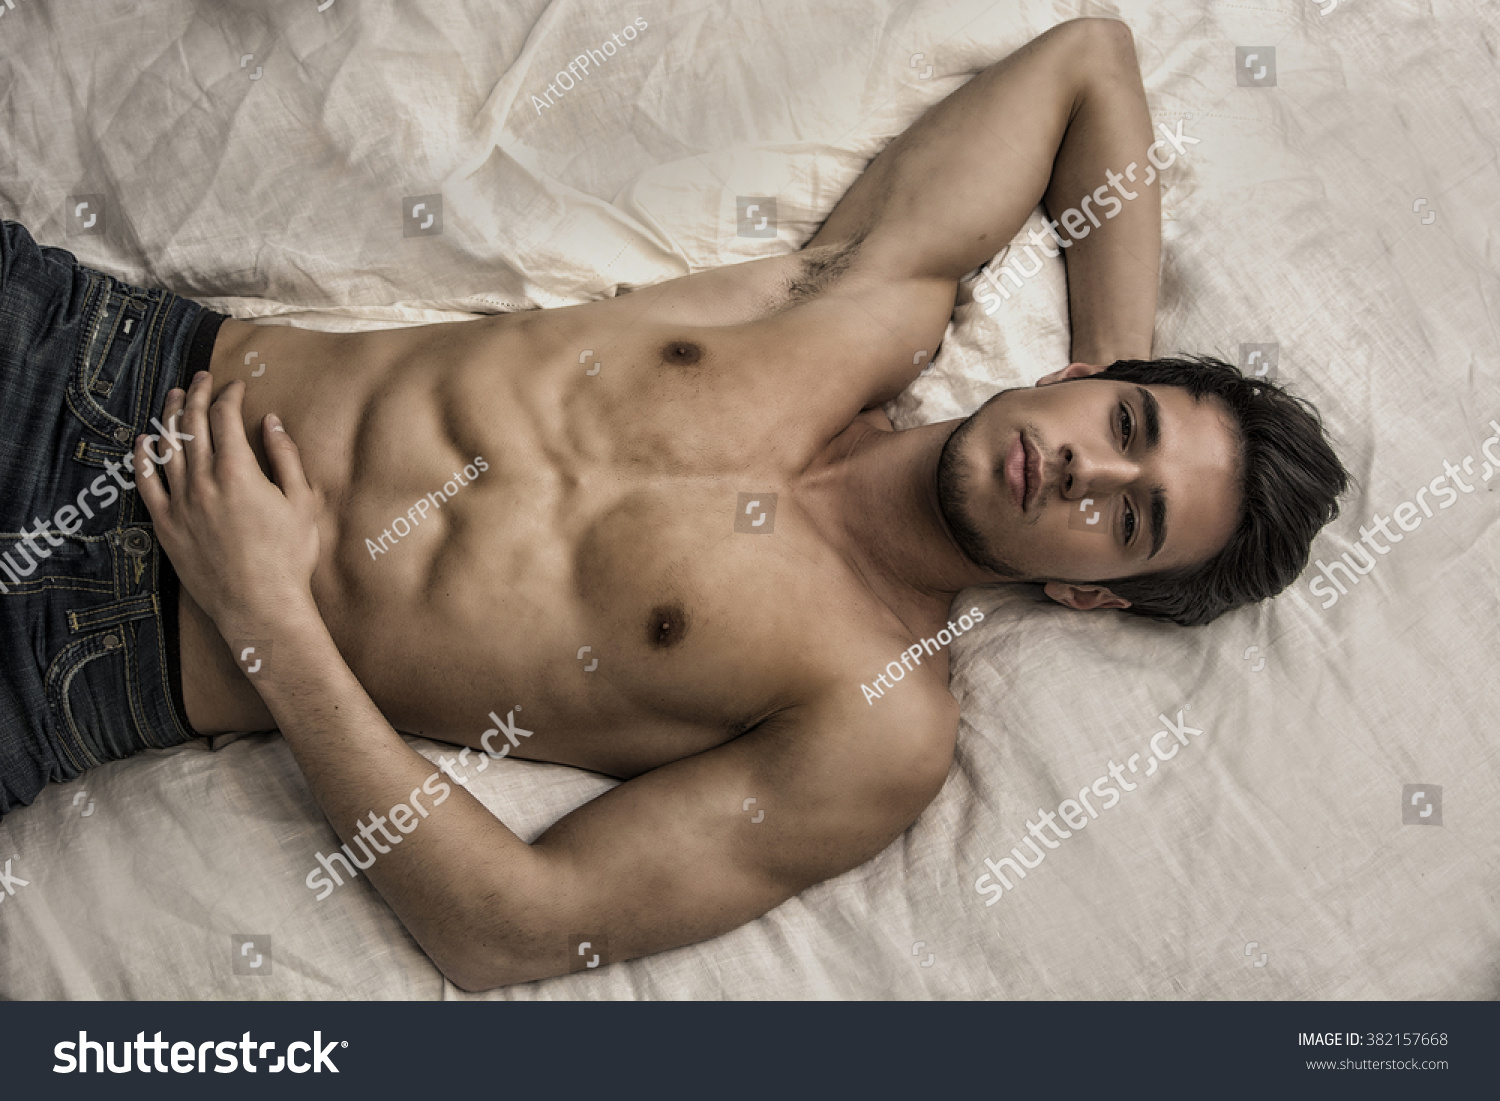 Shirtless Sexy Male Model Lying Alone Foto Stok 382157668 Shutterstock